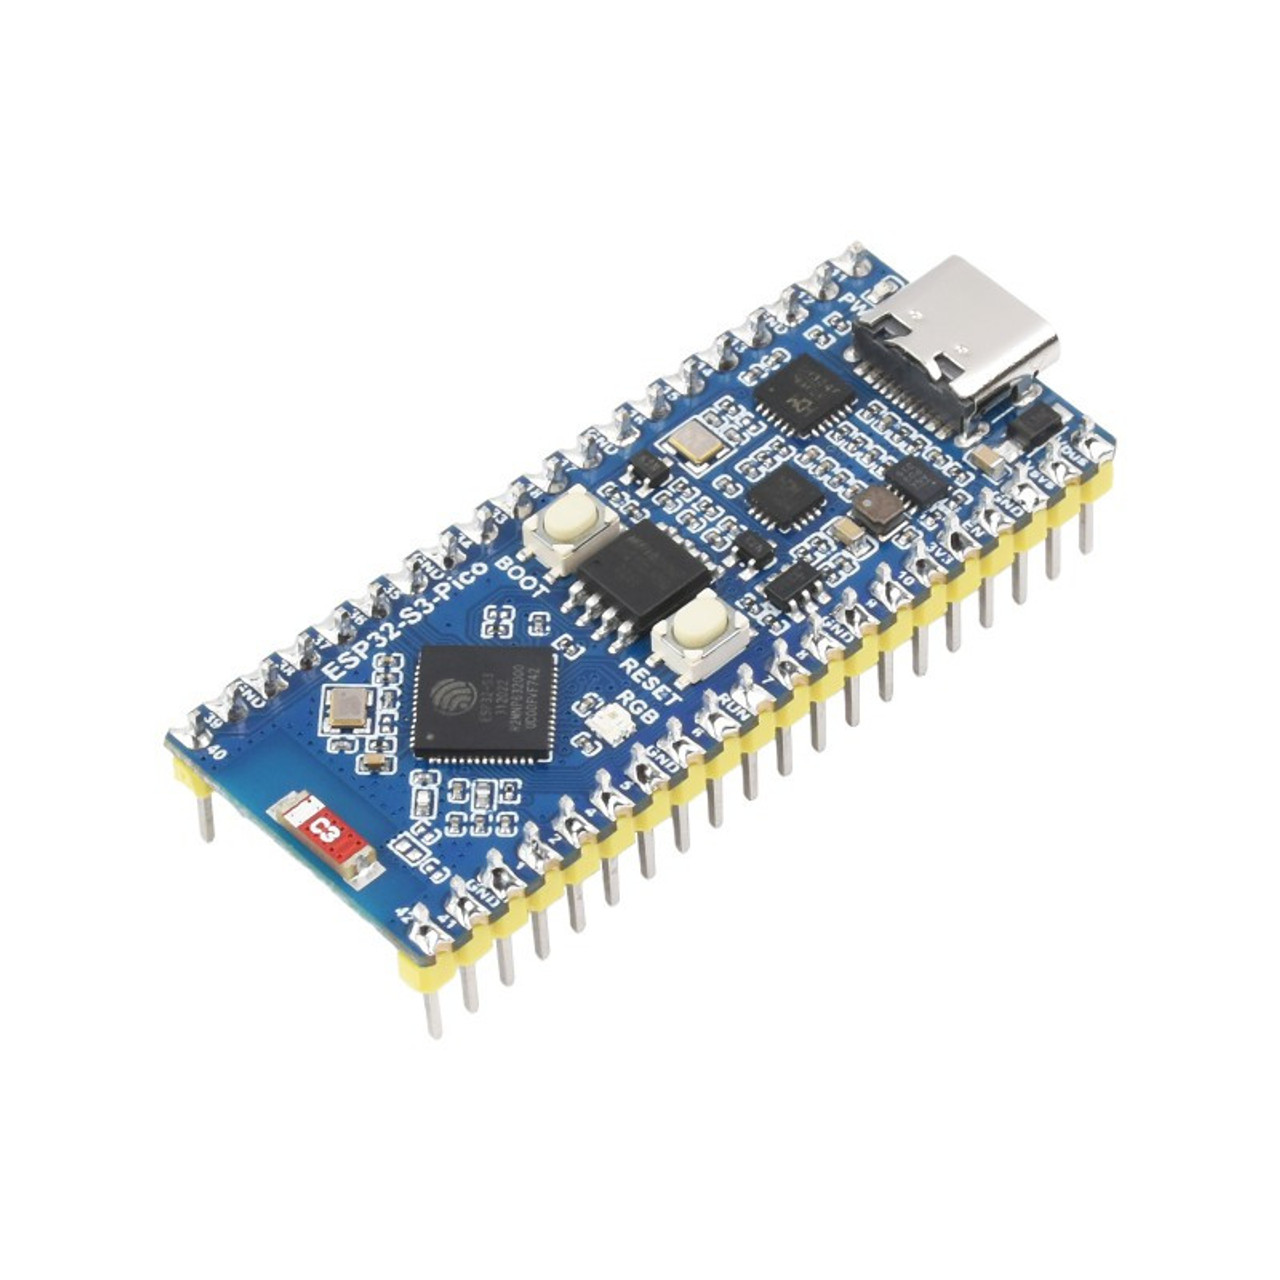 ESP32-S3 Microcontroller, 2.4 GHz Wi-Fi Development Board, w